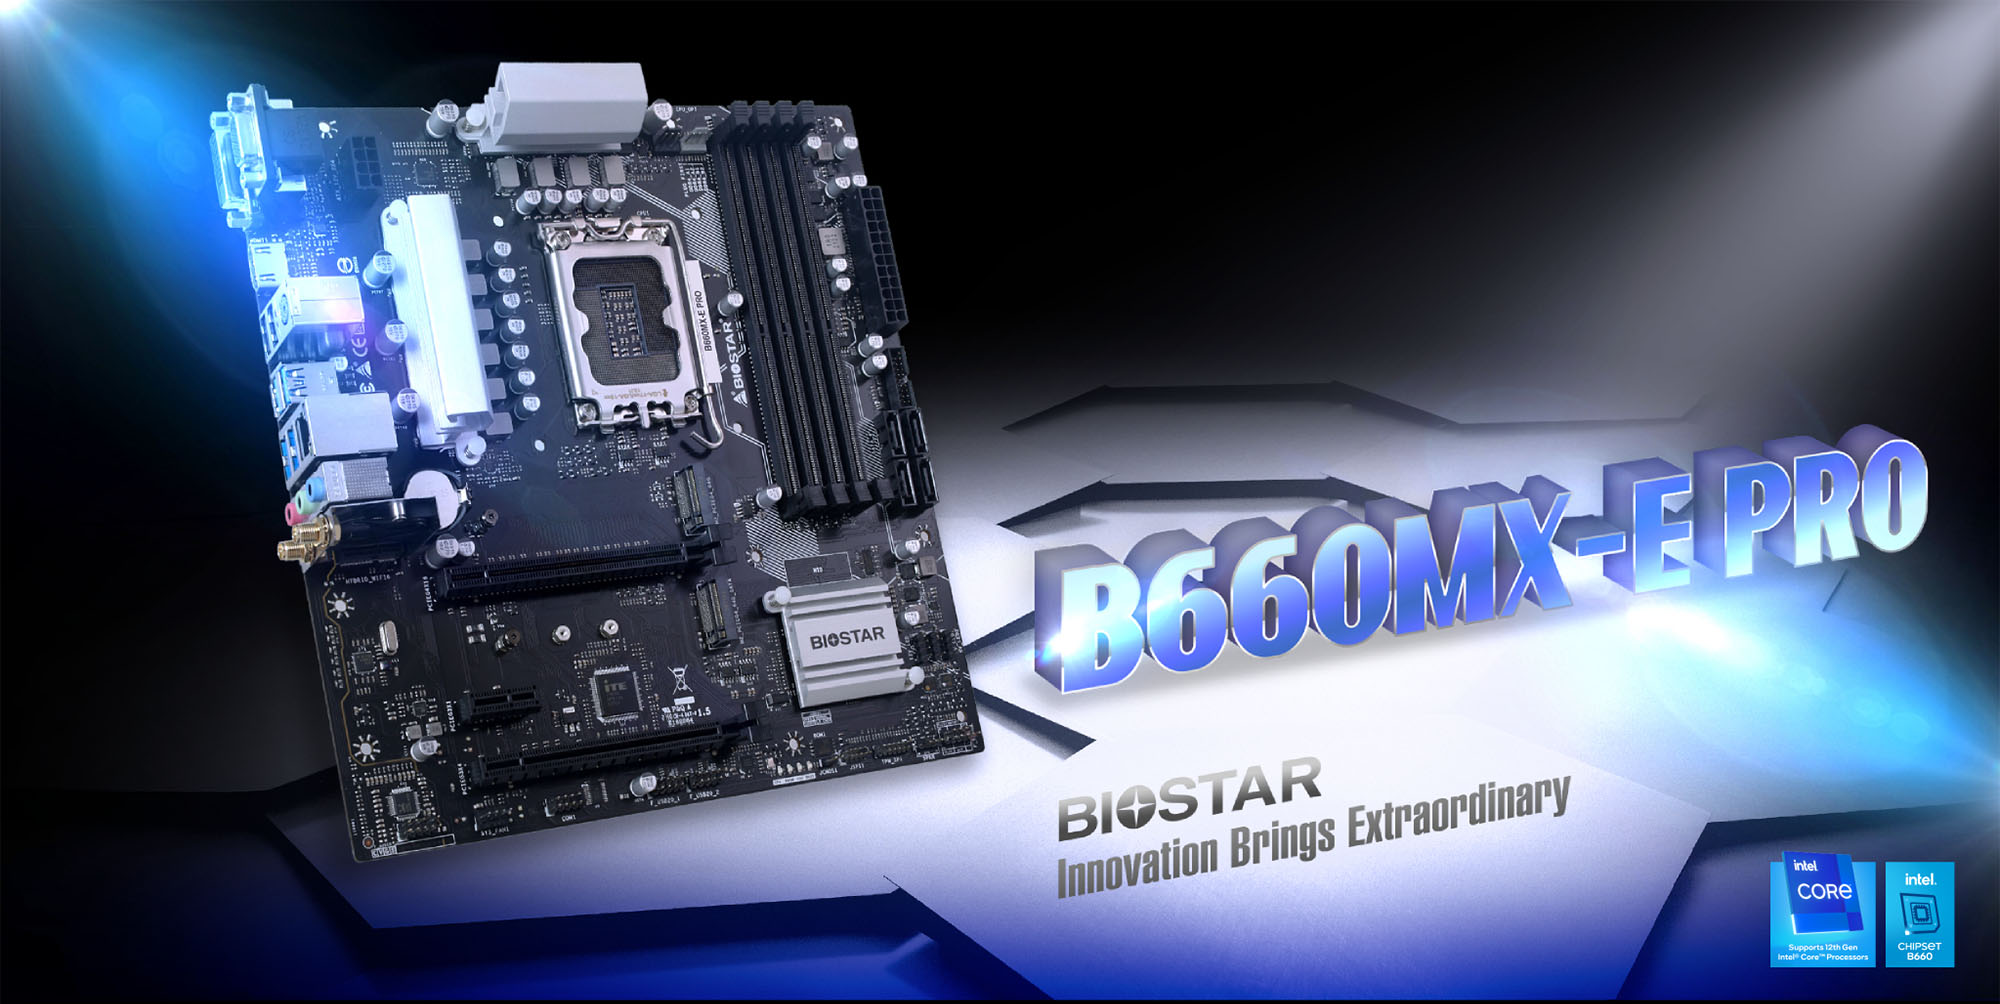 B660MX-E PRO｜BIOSTAR｜株式会社アユート PCパーツ・VR・オーディオ等周辺機器 総合代理店